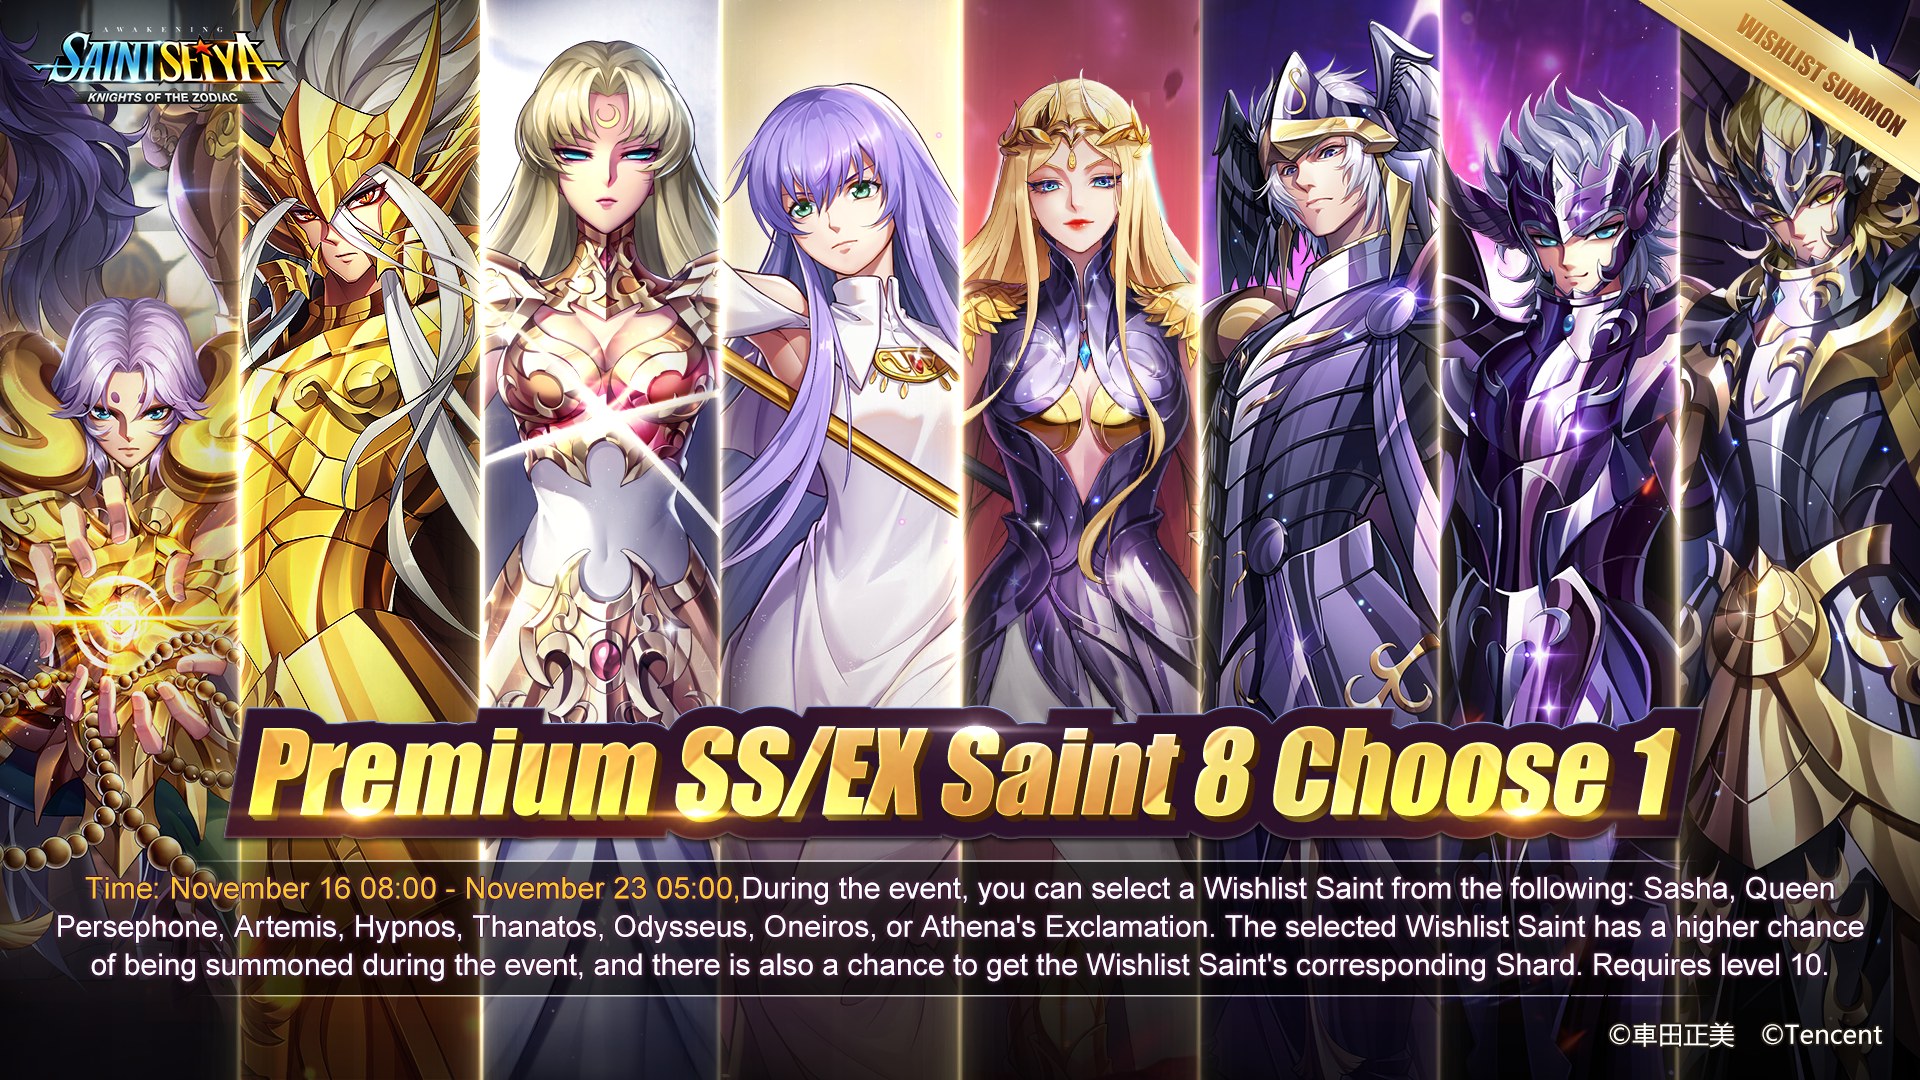 Premium SS/EX Saint 8 Choisissez 1